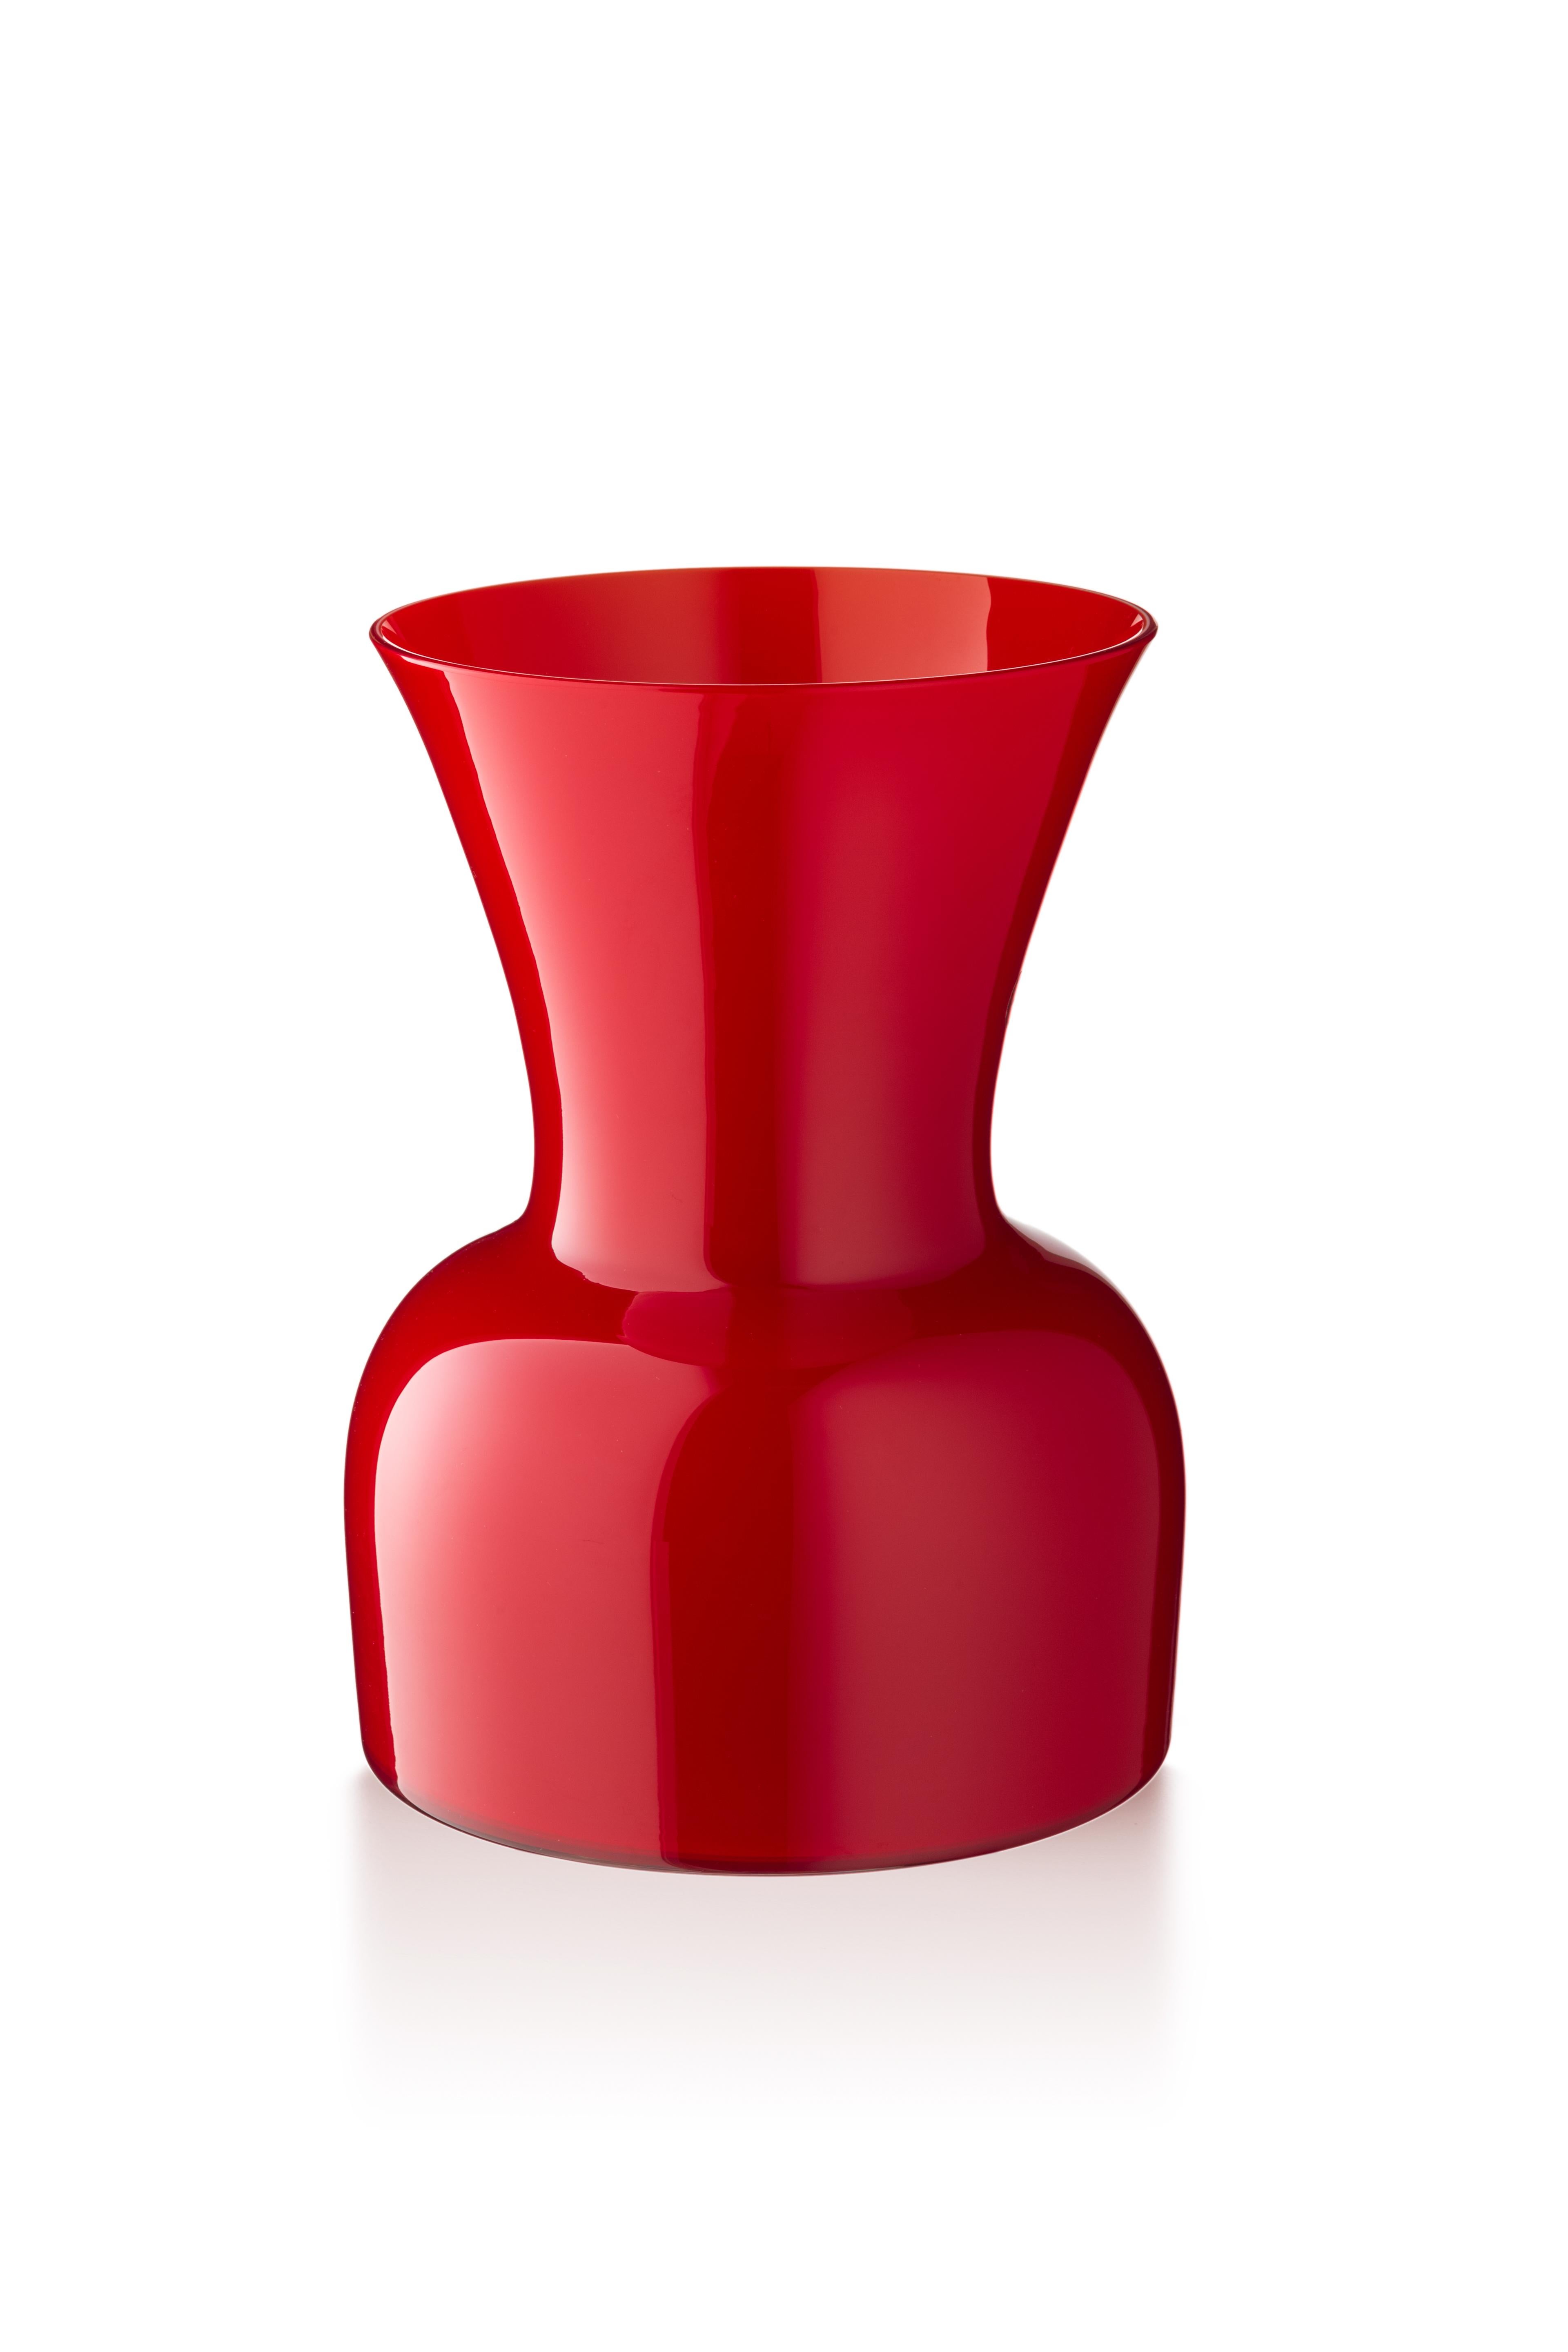 Red (10036) Large Profili Daisy Murano Glass Vase by Anna Gili